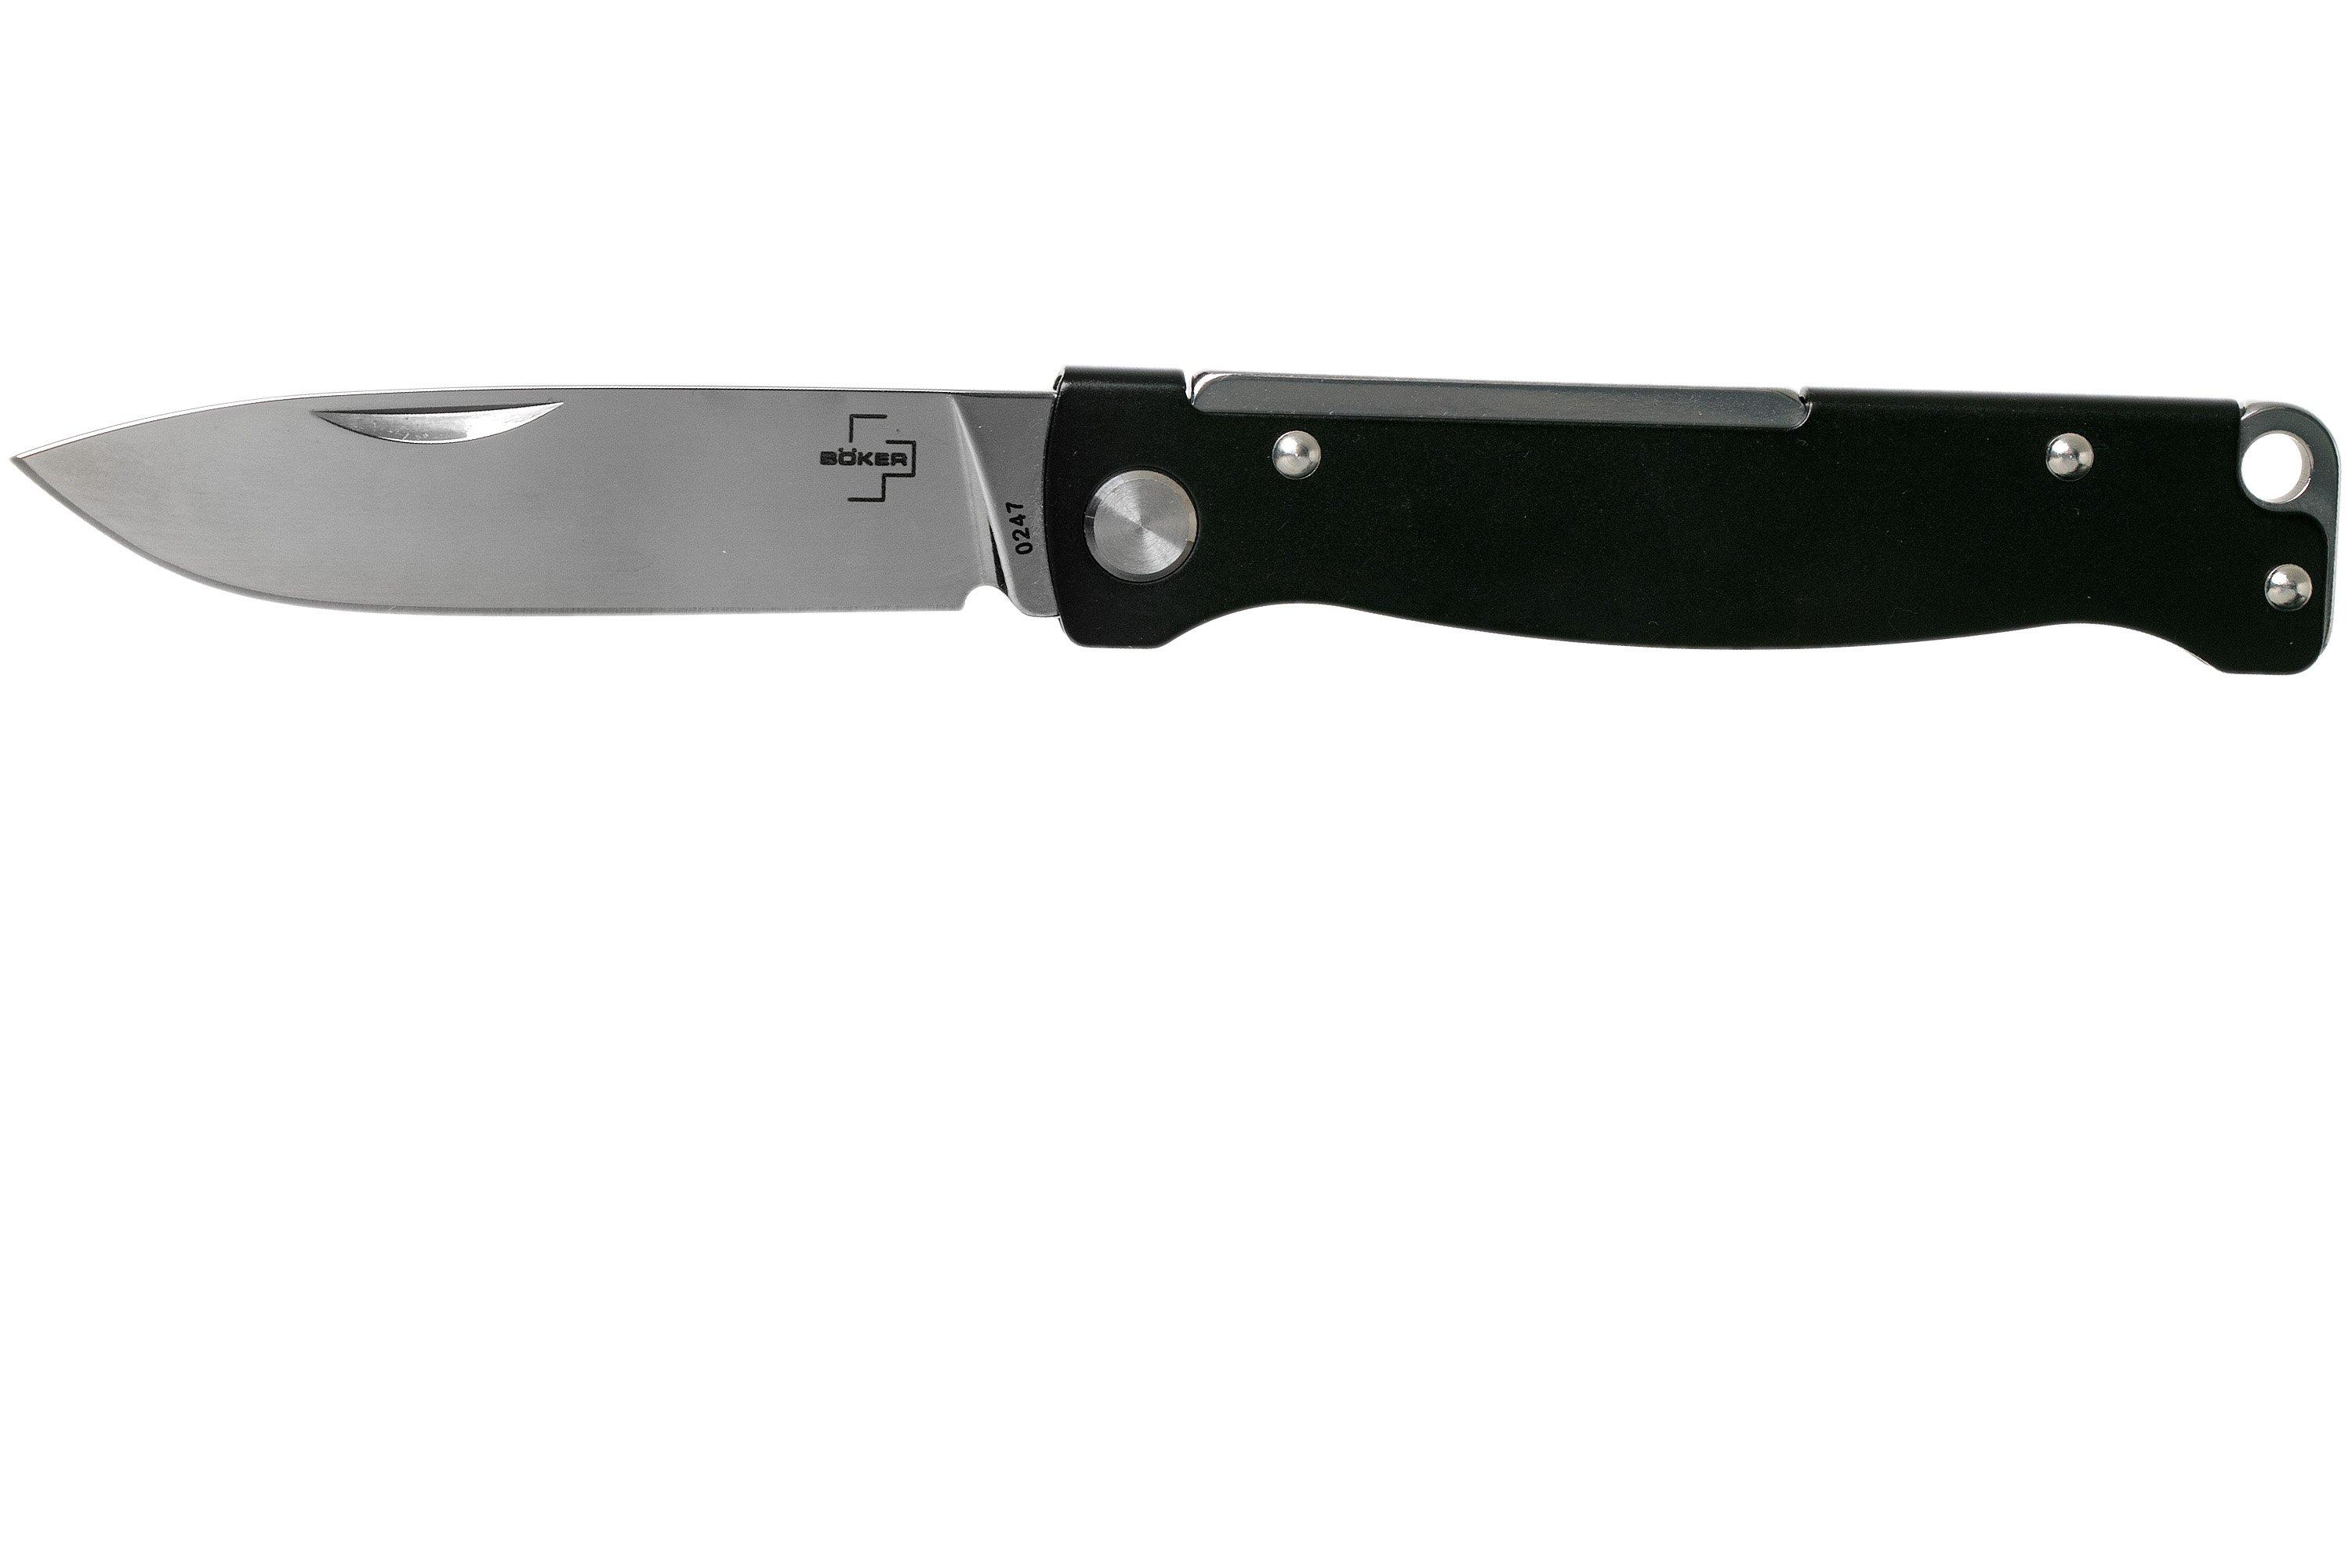 Böker Plus Atlas Black 01BO851 pocket knife  Advantageously shopping at